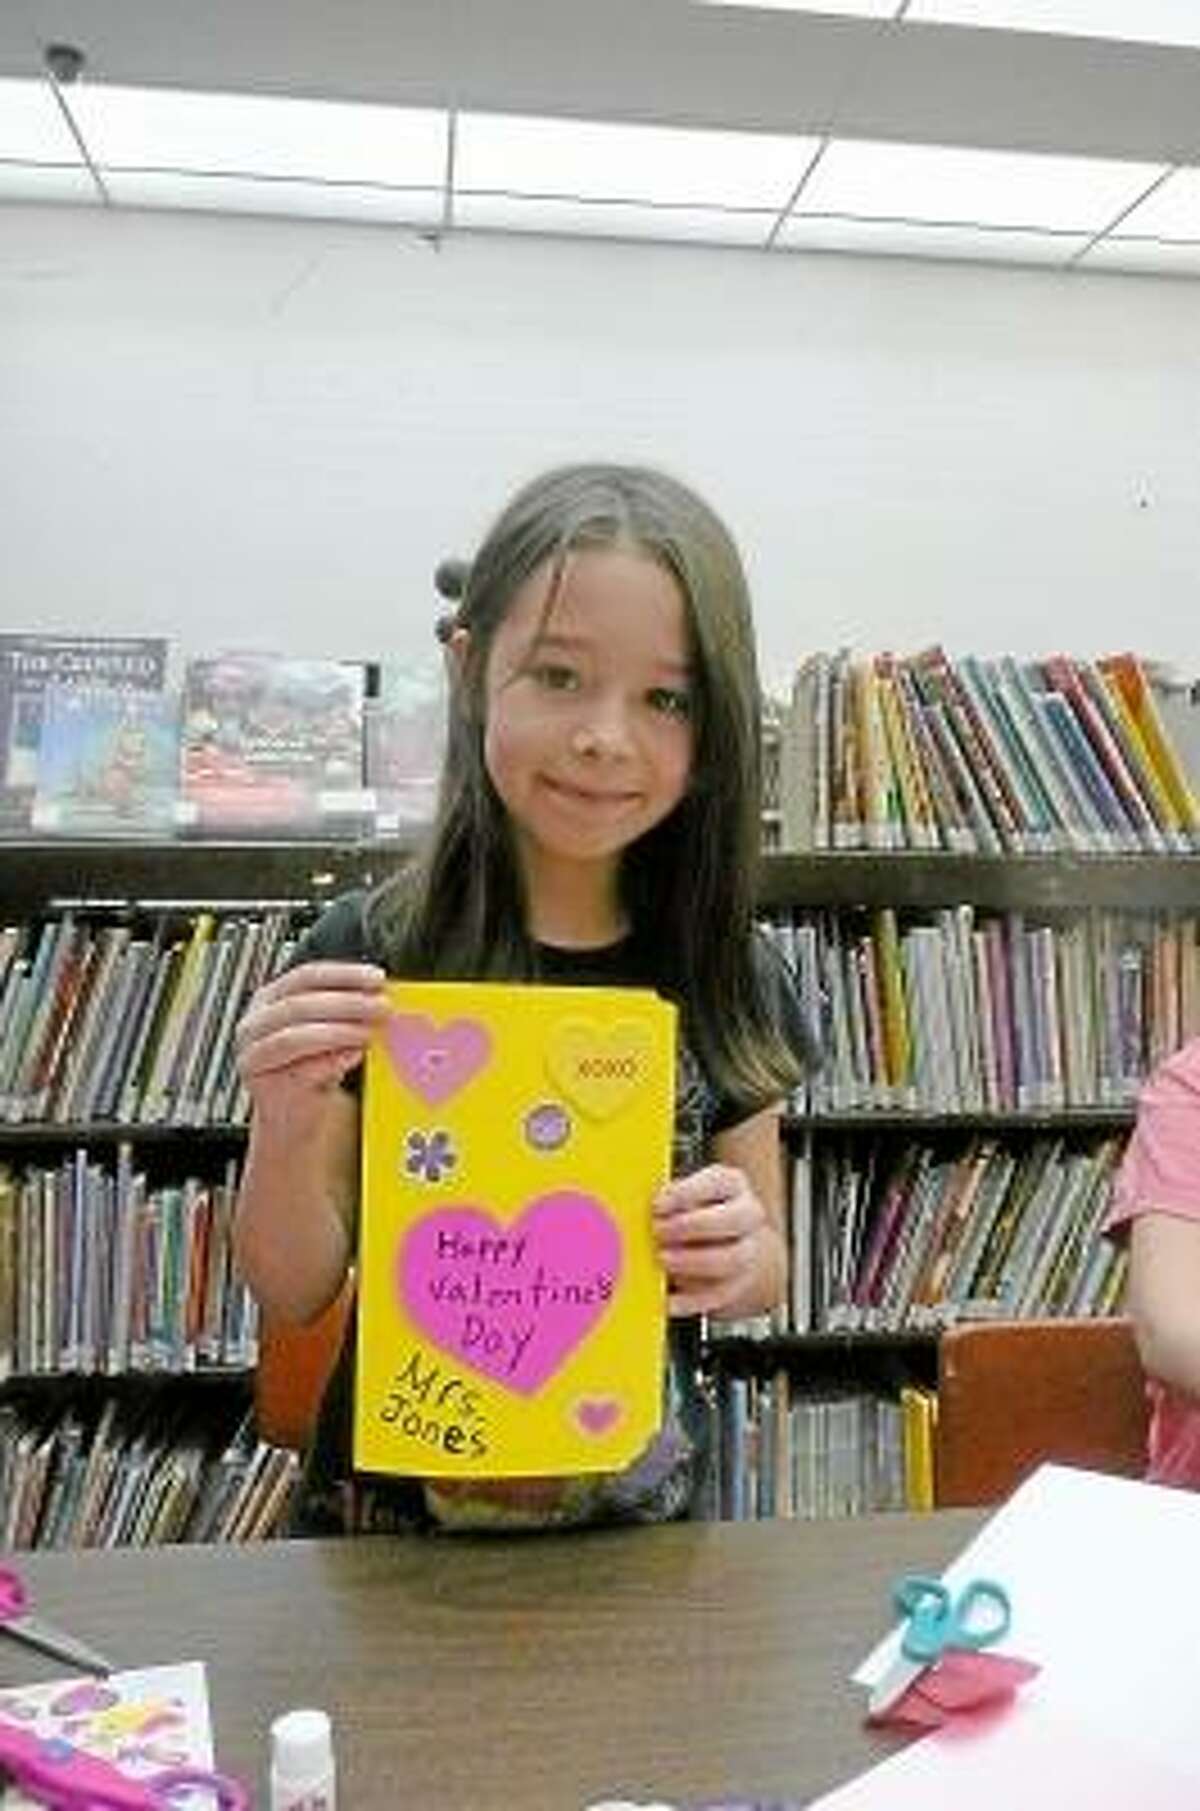 KATE HARTMAN/Register Citizen Liana Haxo, age 8, made a card for a teacher in her school.